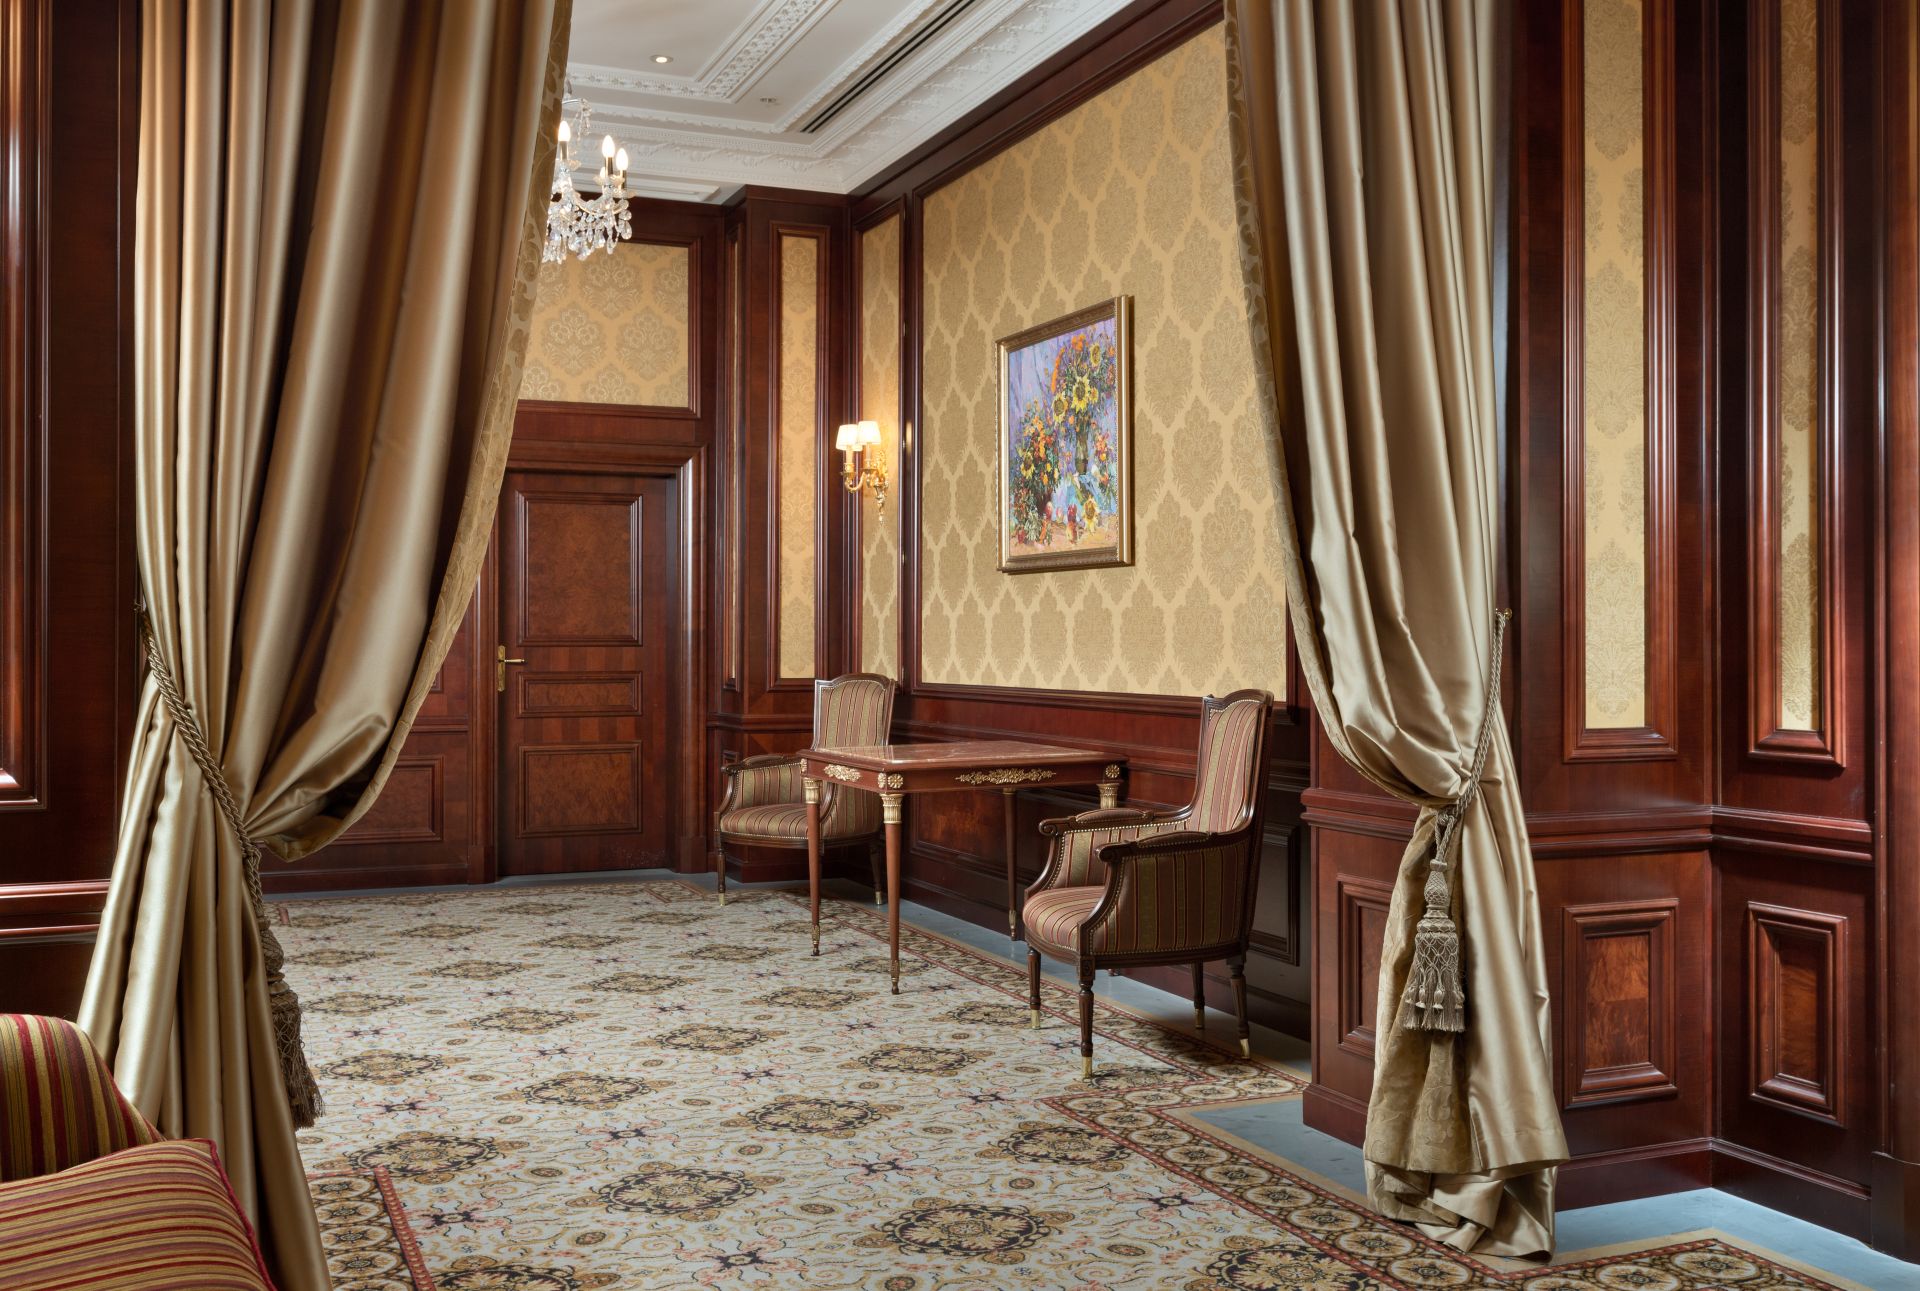 Tea room at the Fairmont Grand Hotel